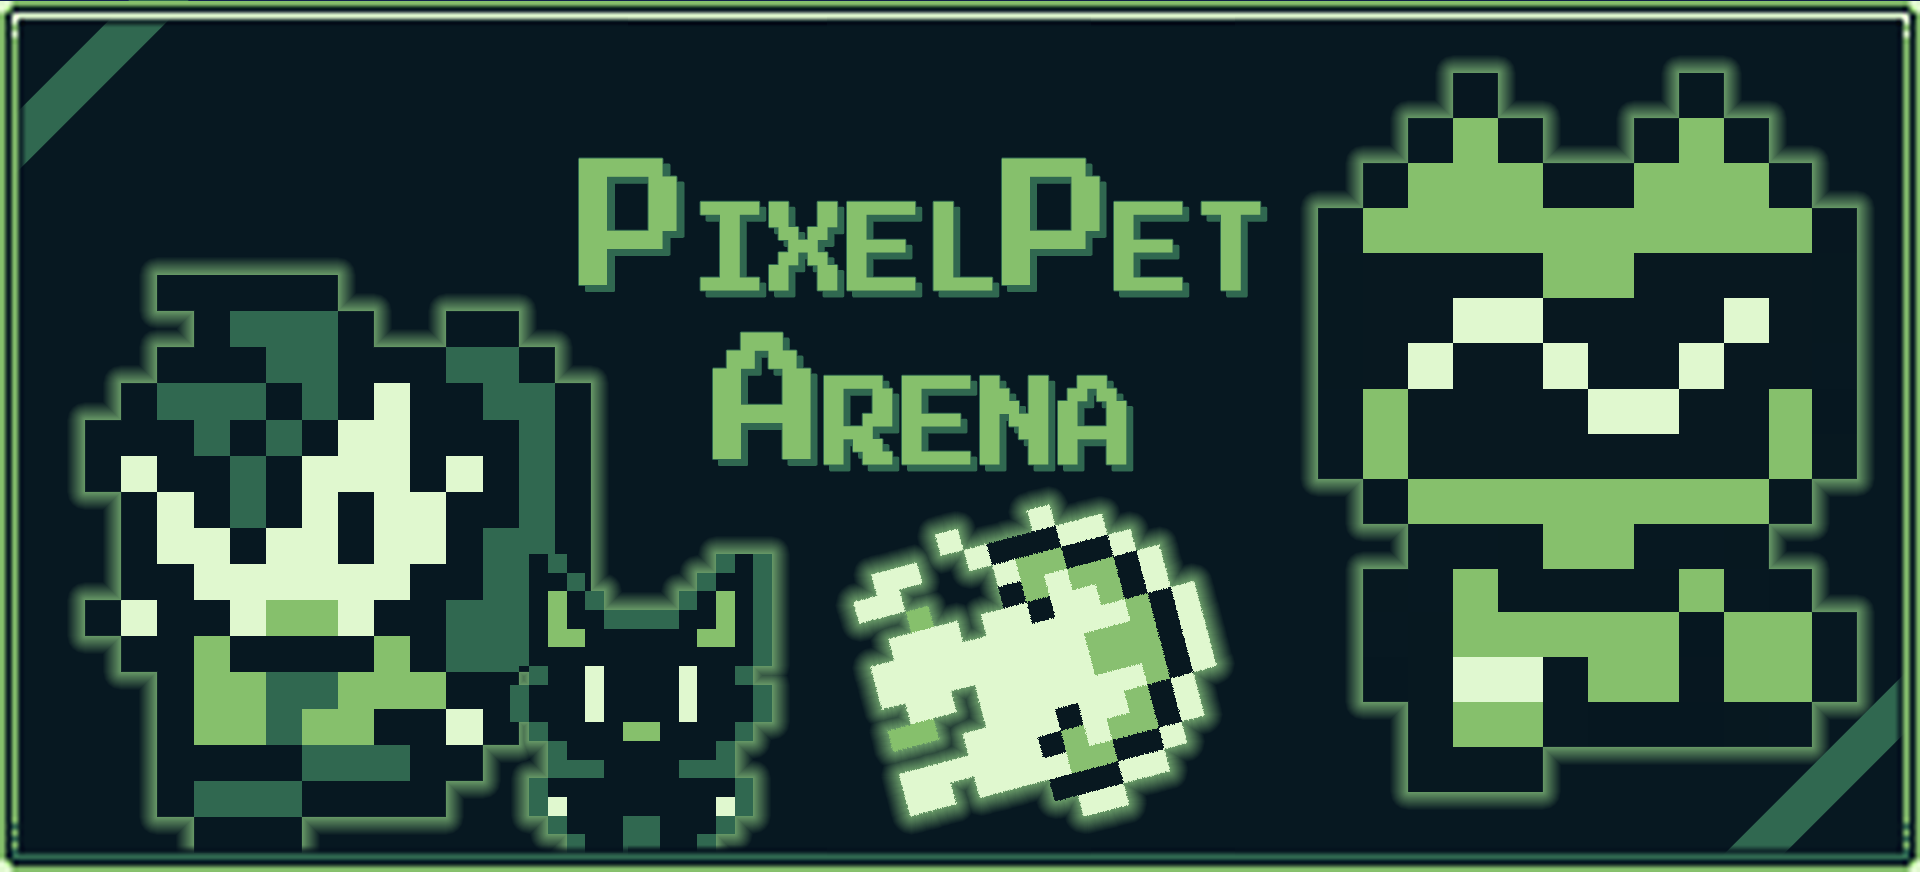 PixelPet Arena